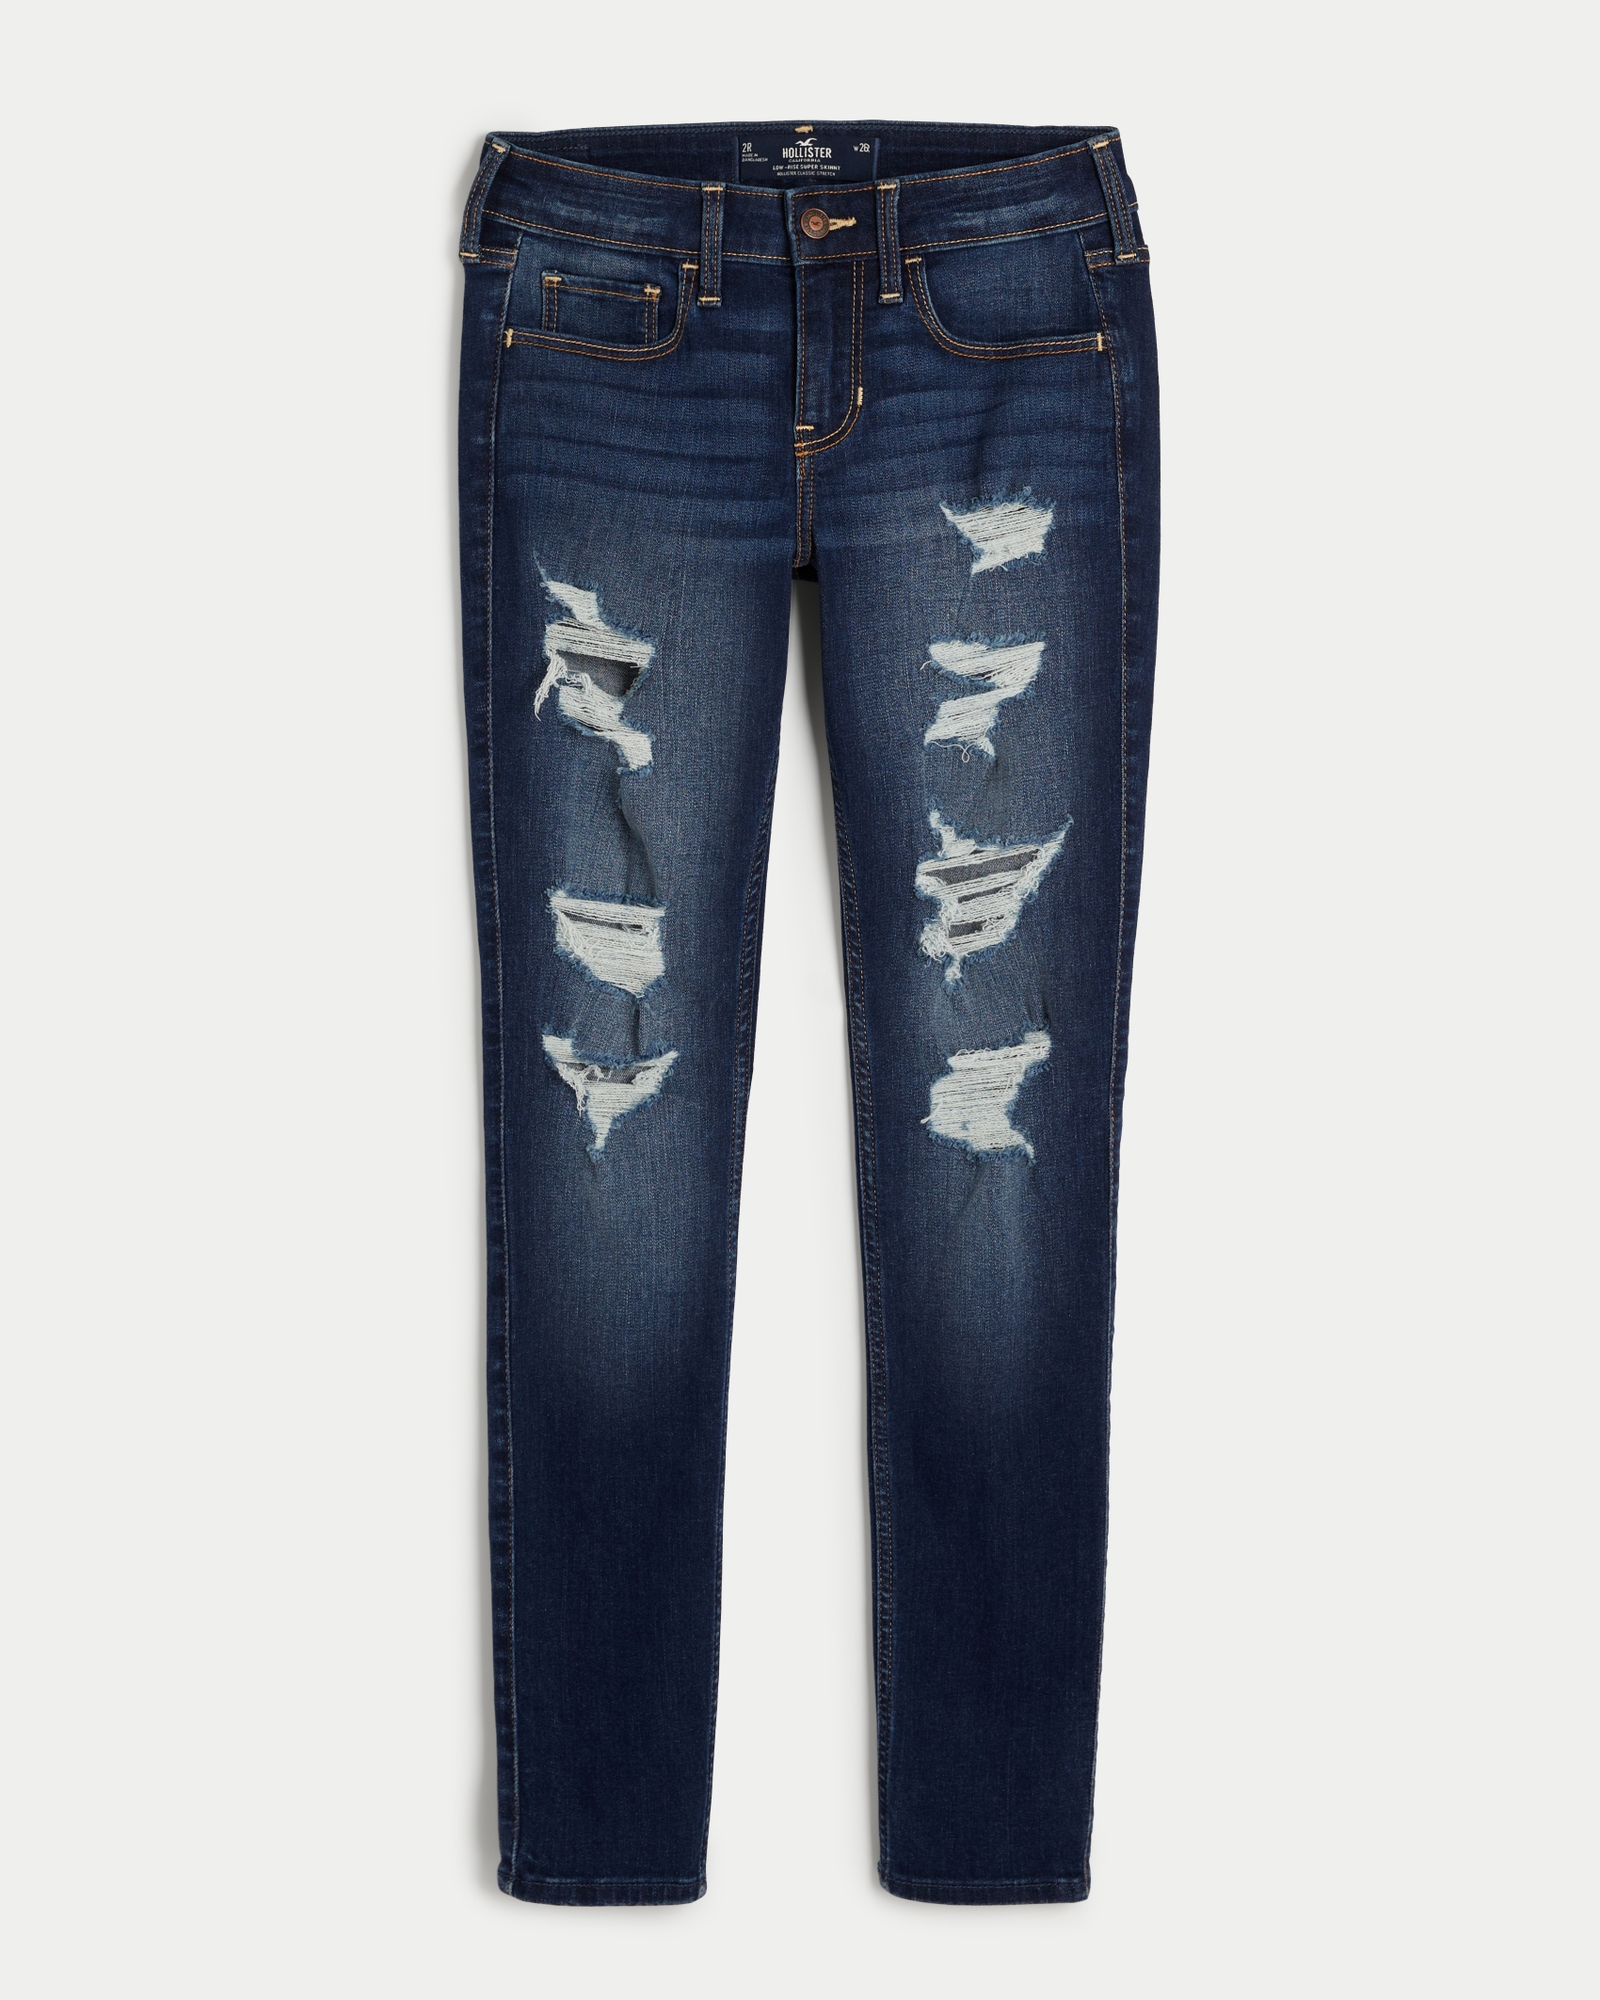 American Eagle Skinny Jeans Women's Size 00 Super Stretch Dark